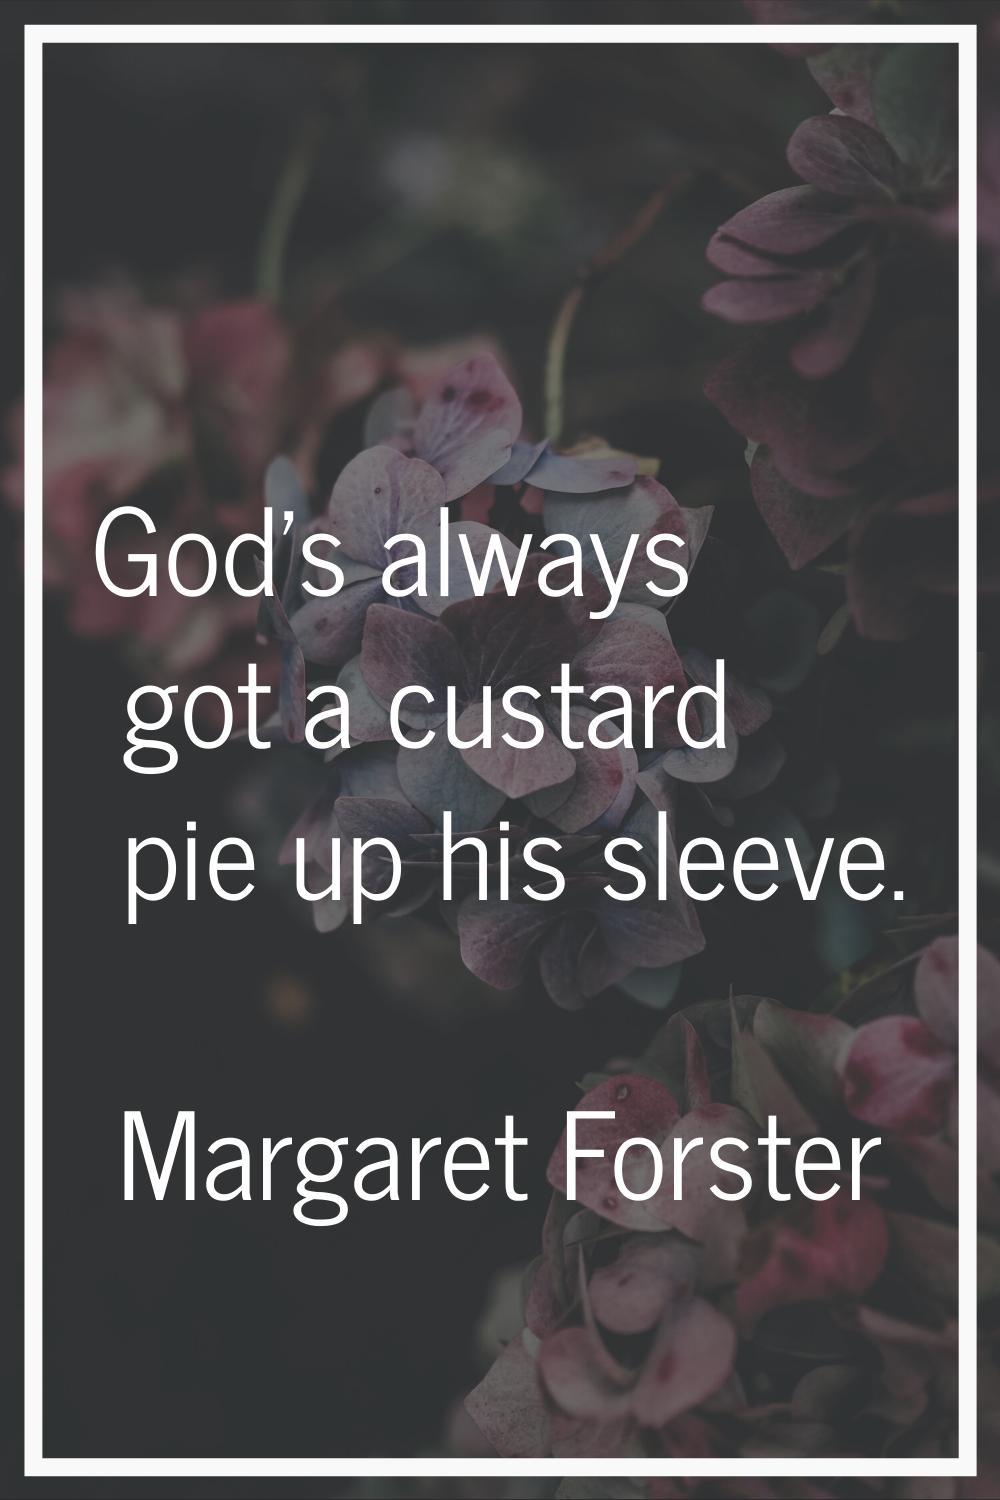 God's always got a custard pie up his sleeve.